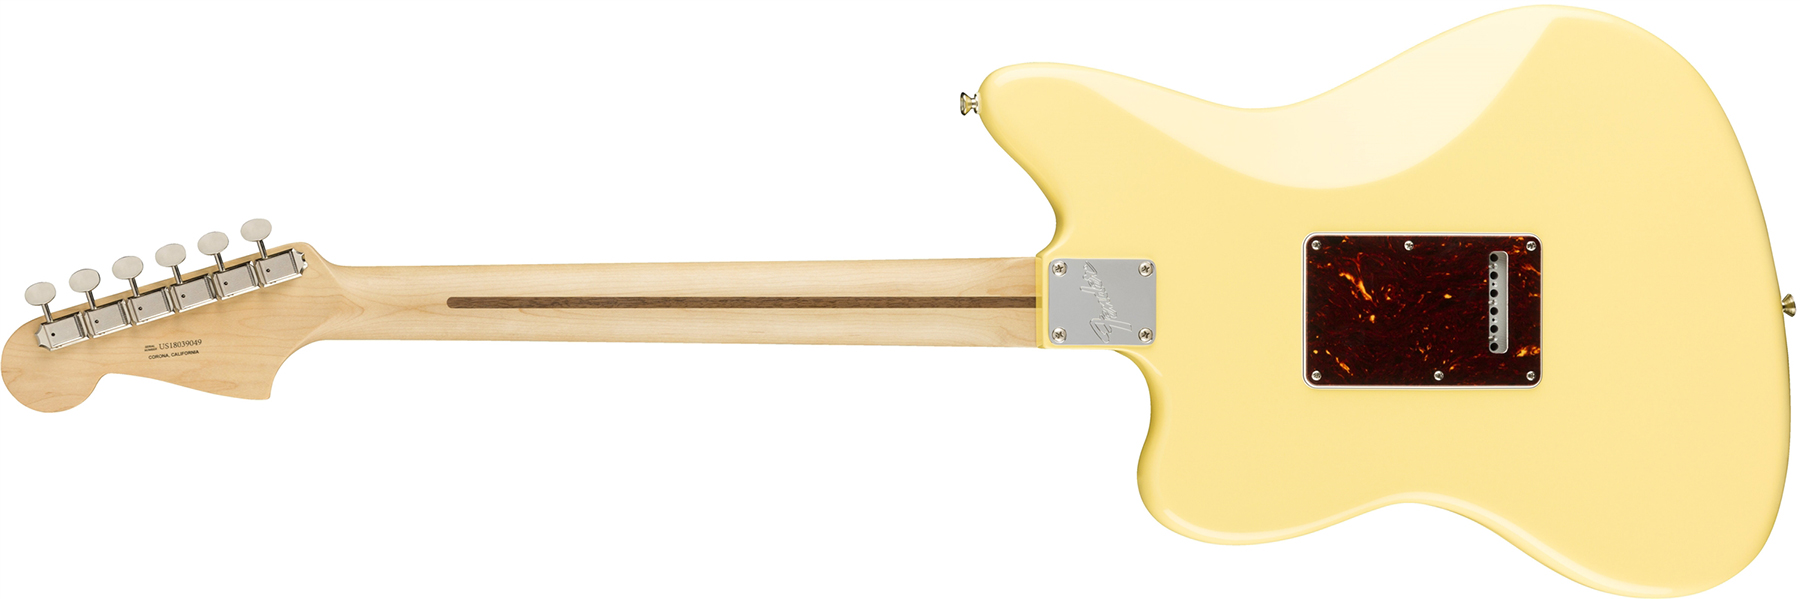 Fender Jazzmaster American Performer Usa Ss Rw - Vintage White - Guitare Électrique Double Cut - Variation 1